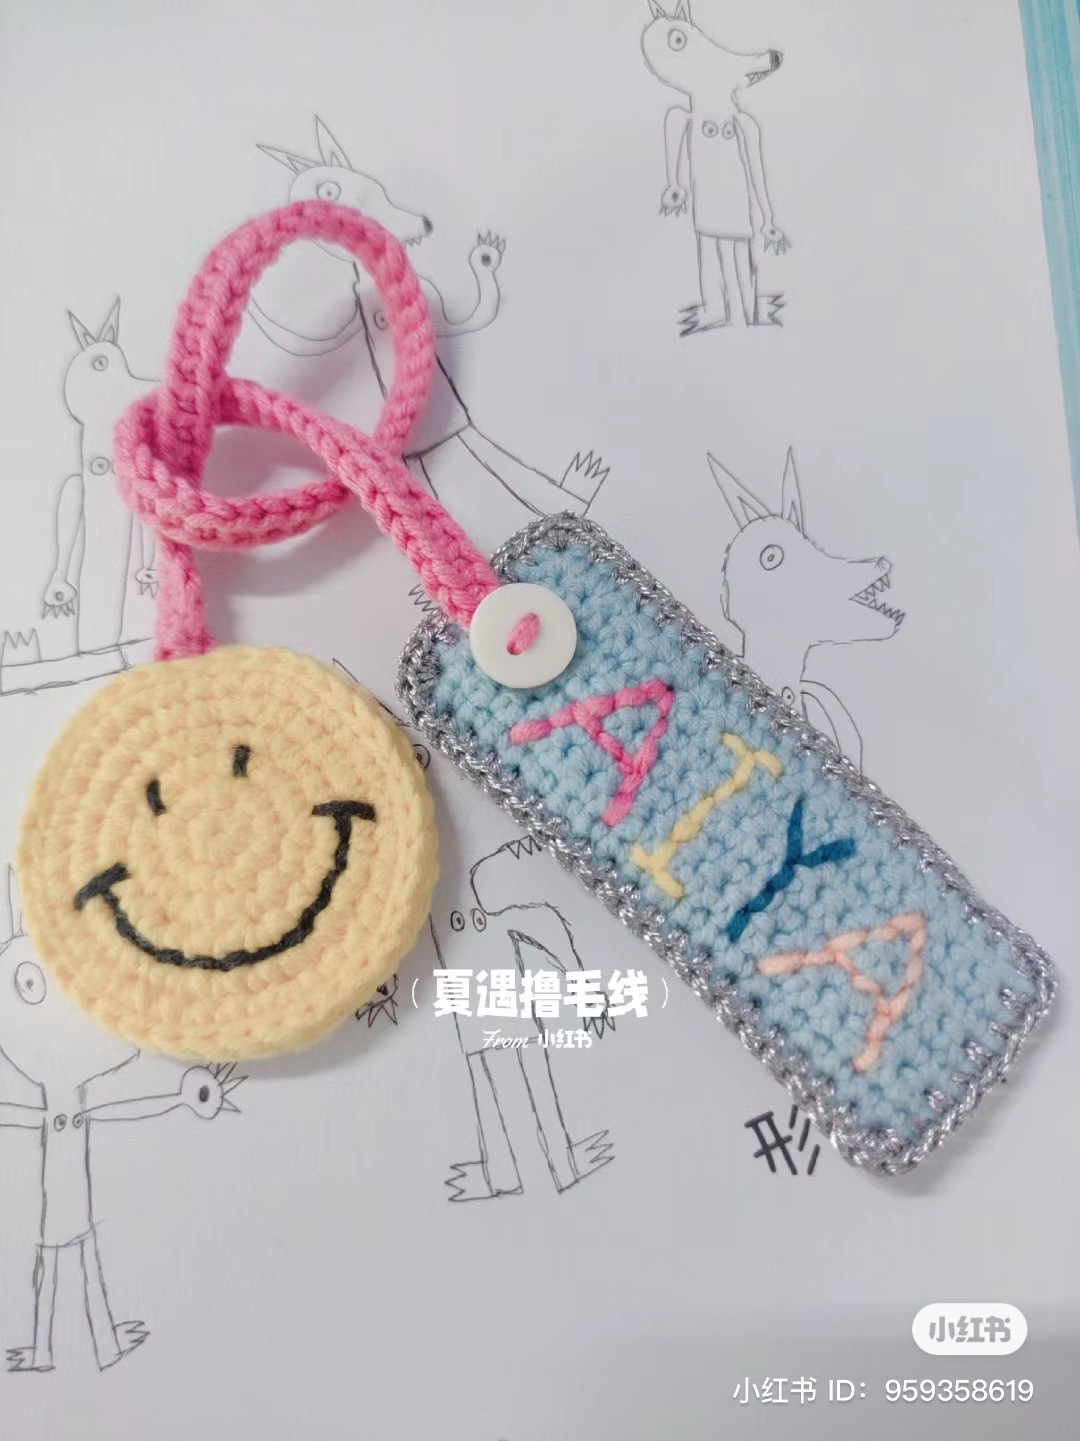 Crochet pattern Smiley face illustration
: